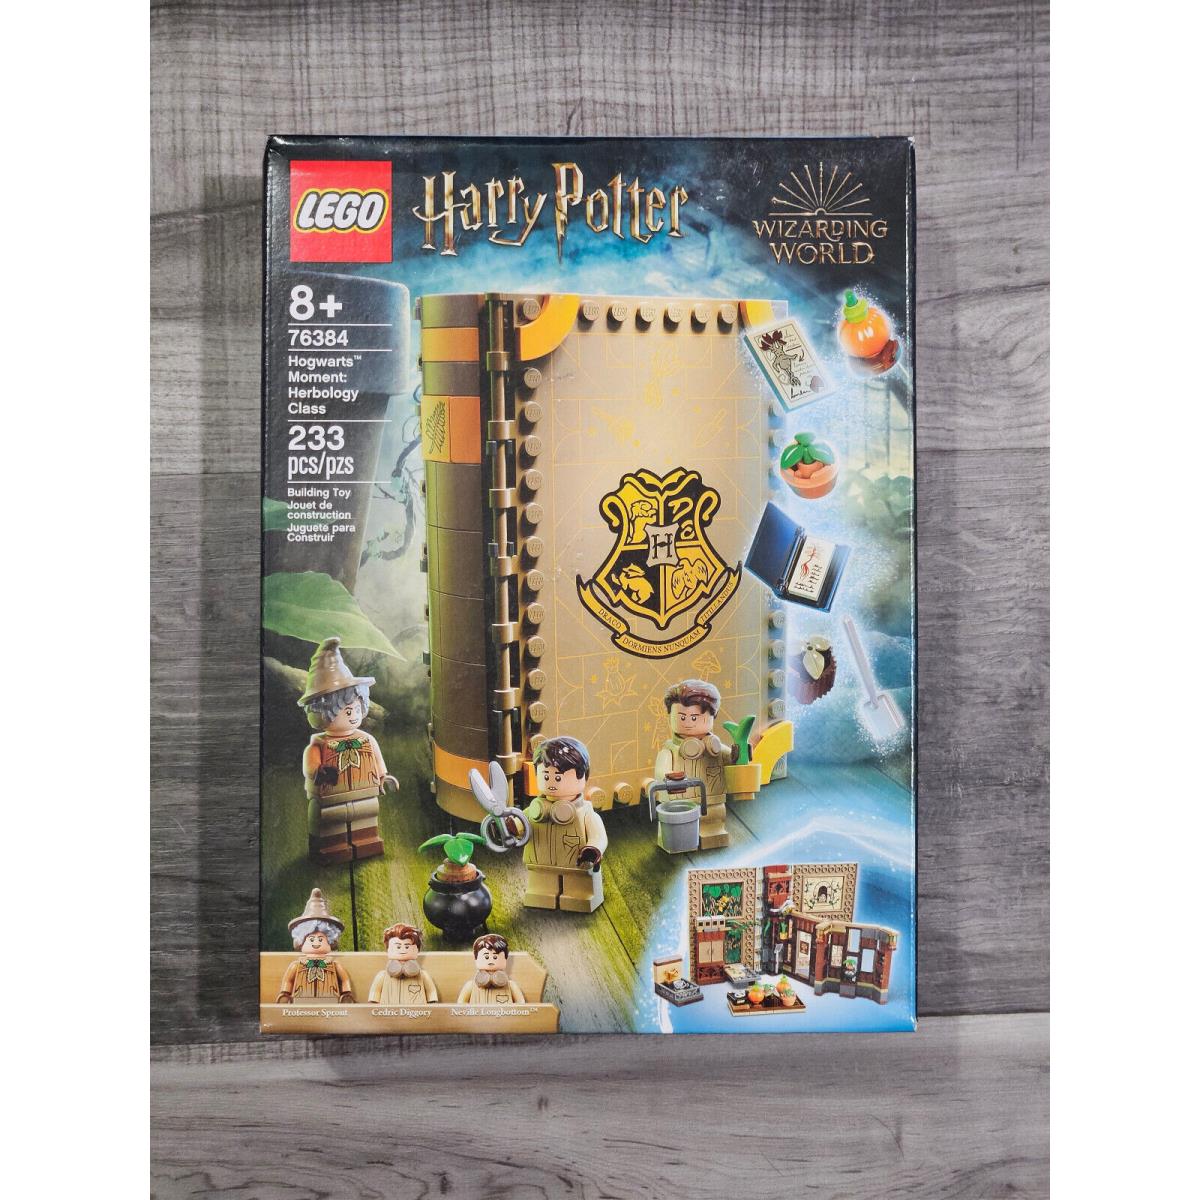 Lego 76384 Harry Potter: Hogwarts Moment: Herbology Class Shelf Wear